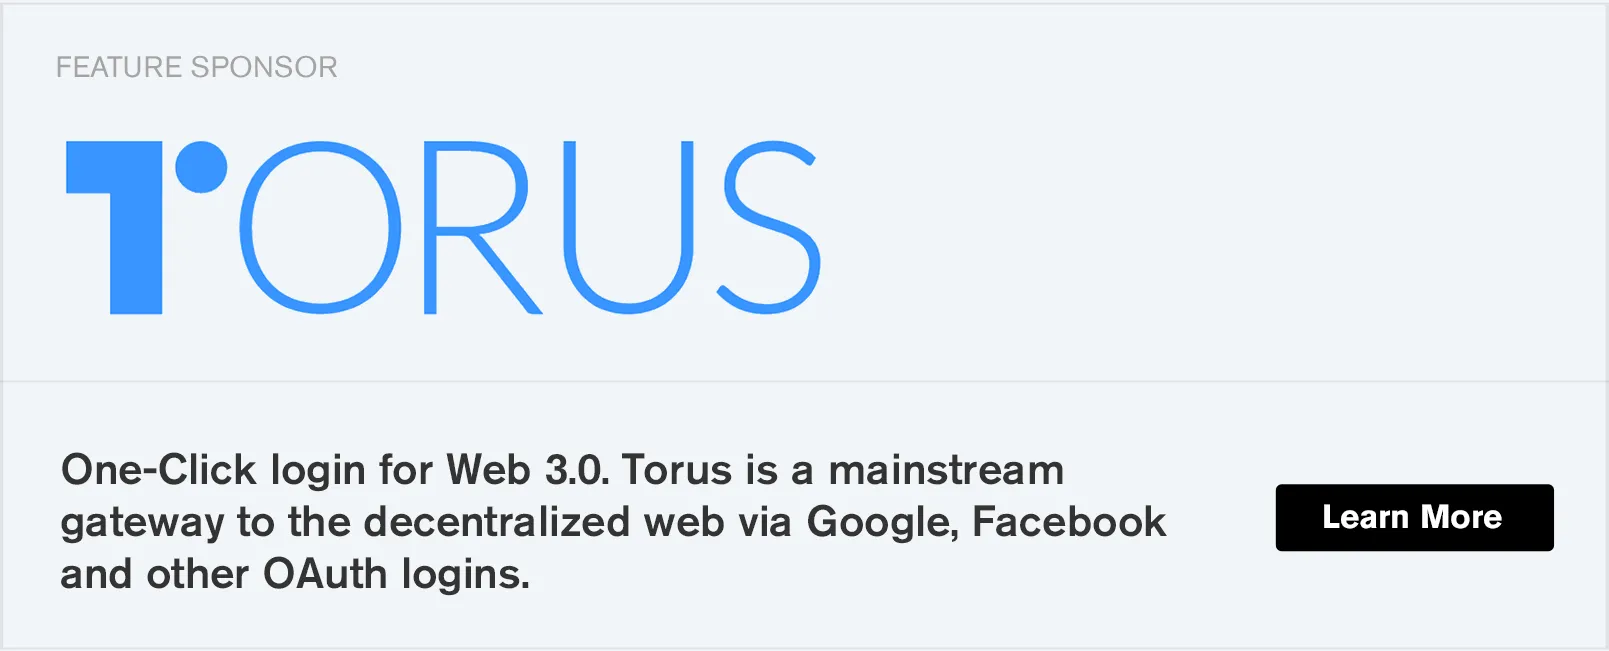 Ethereal-sponsor-image-Torus